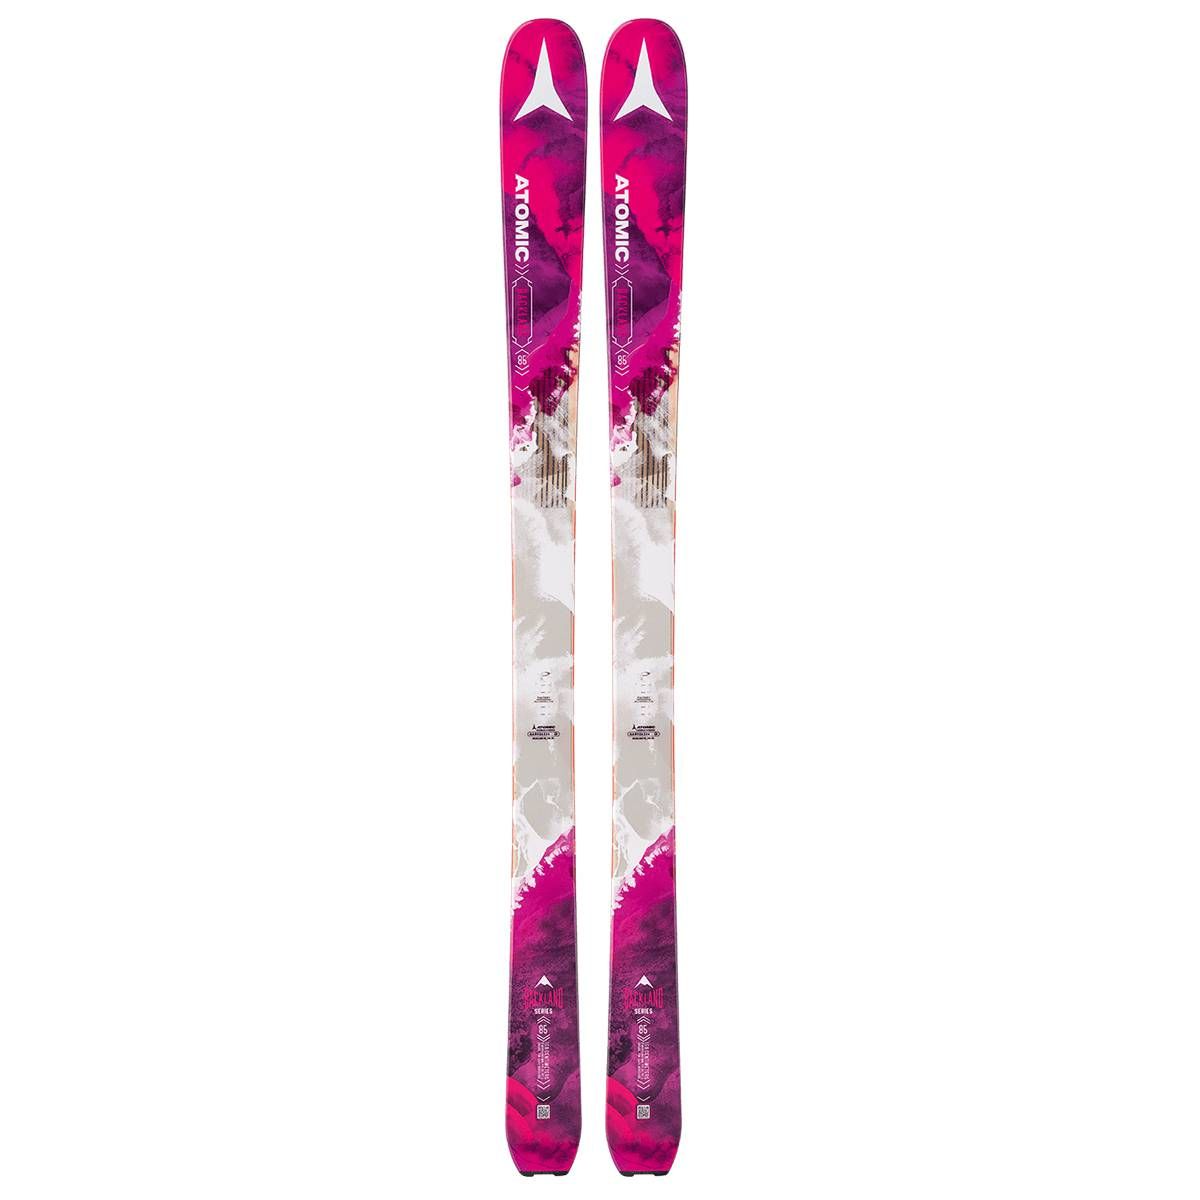 Pack ski test rando Backland 85 Woman + Dynafit ST 10 + Peaux